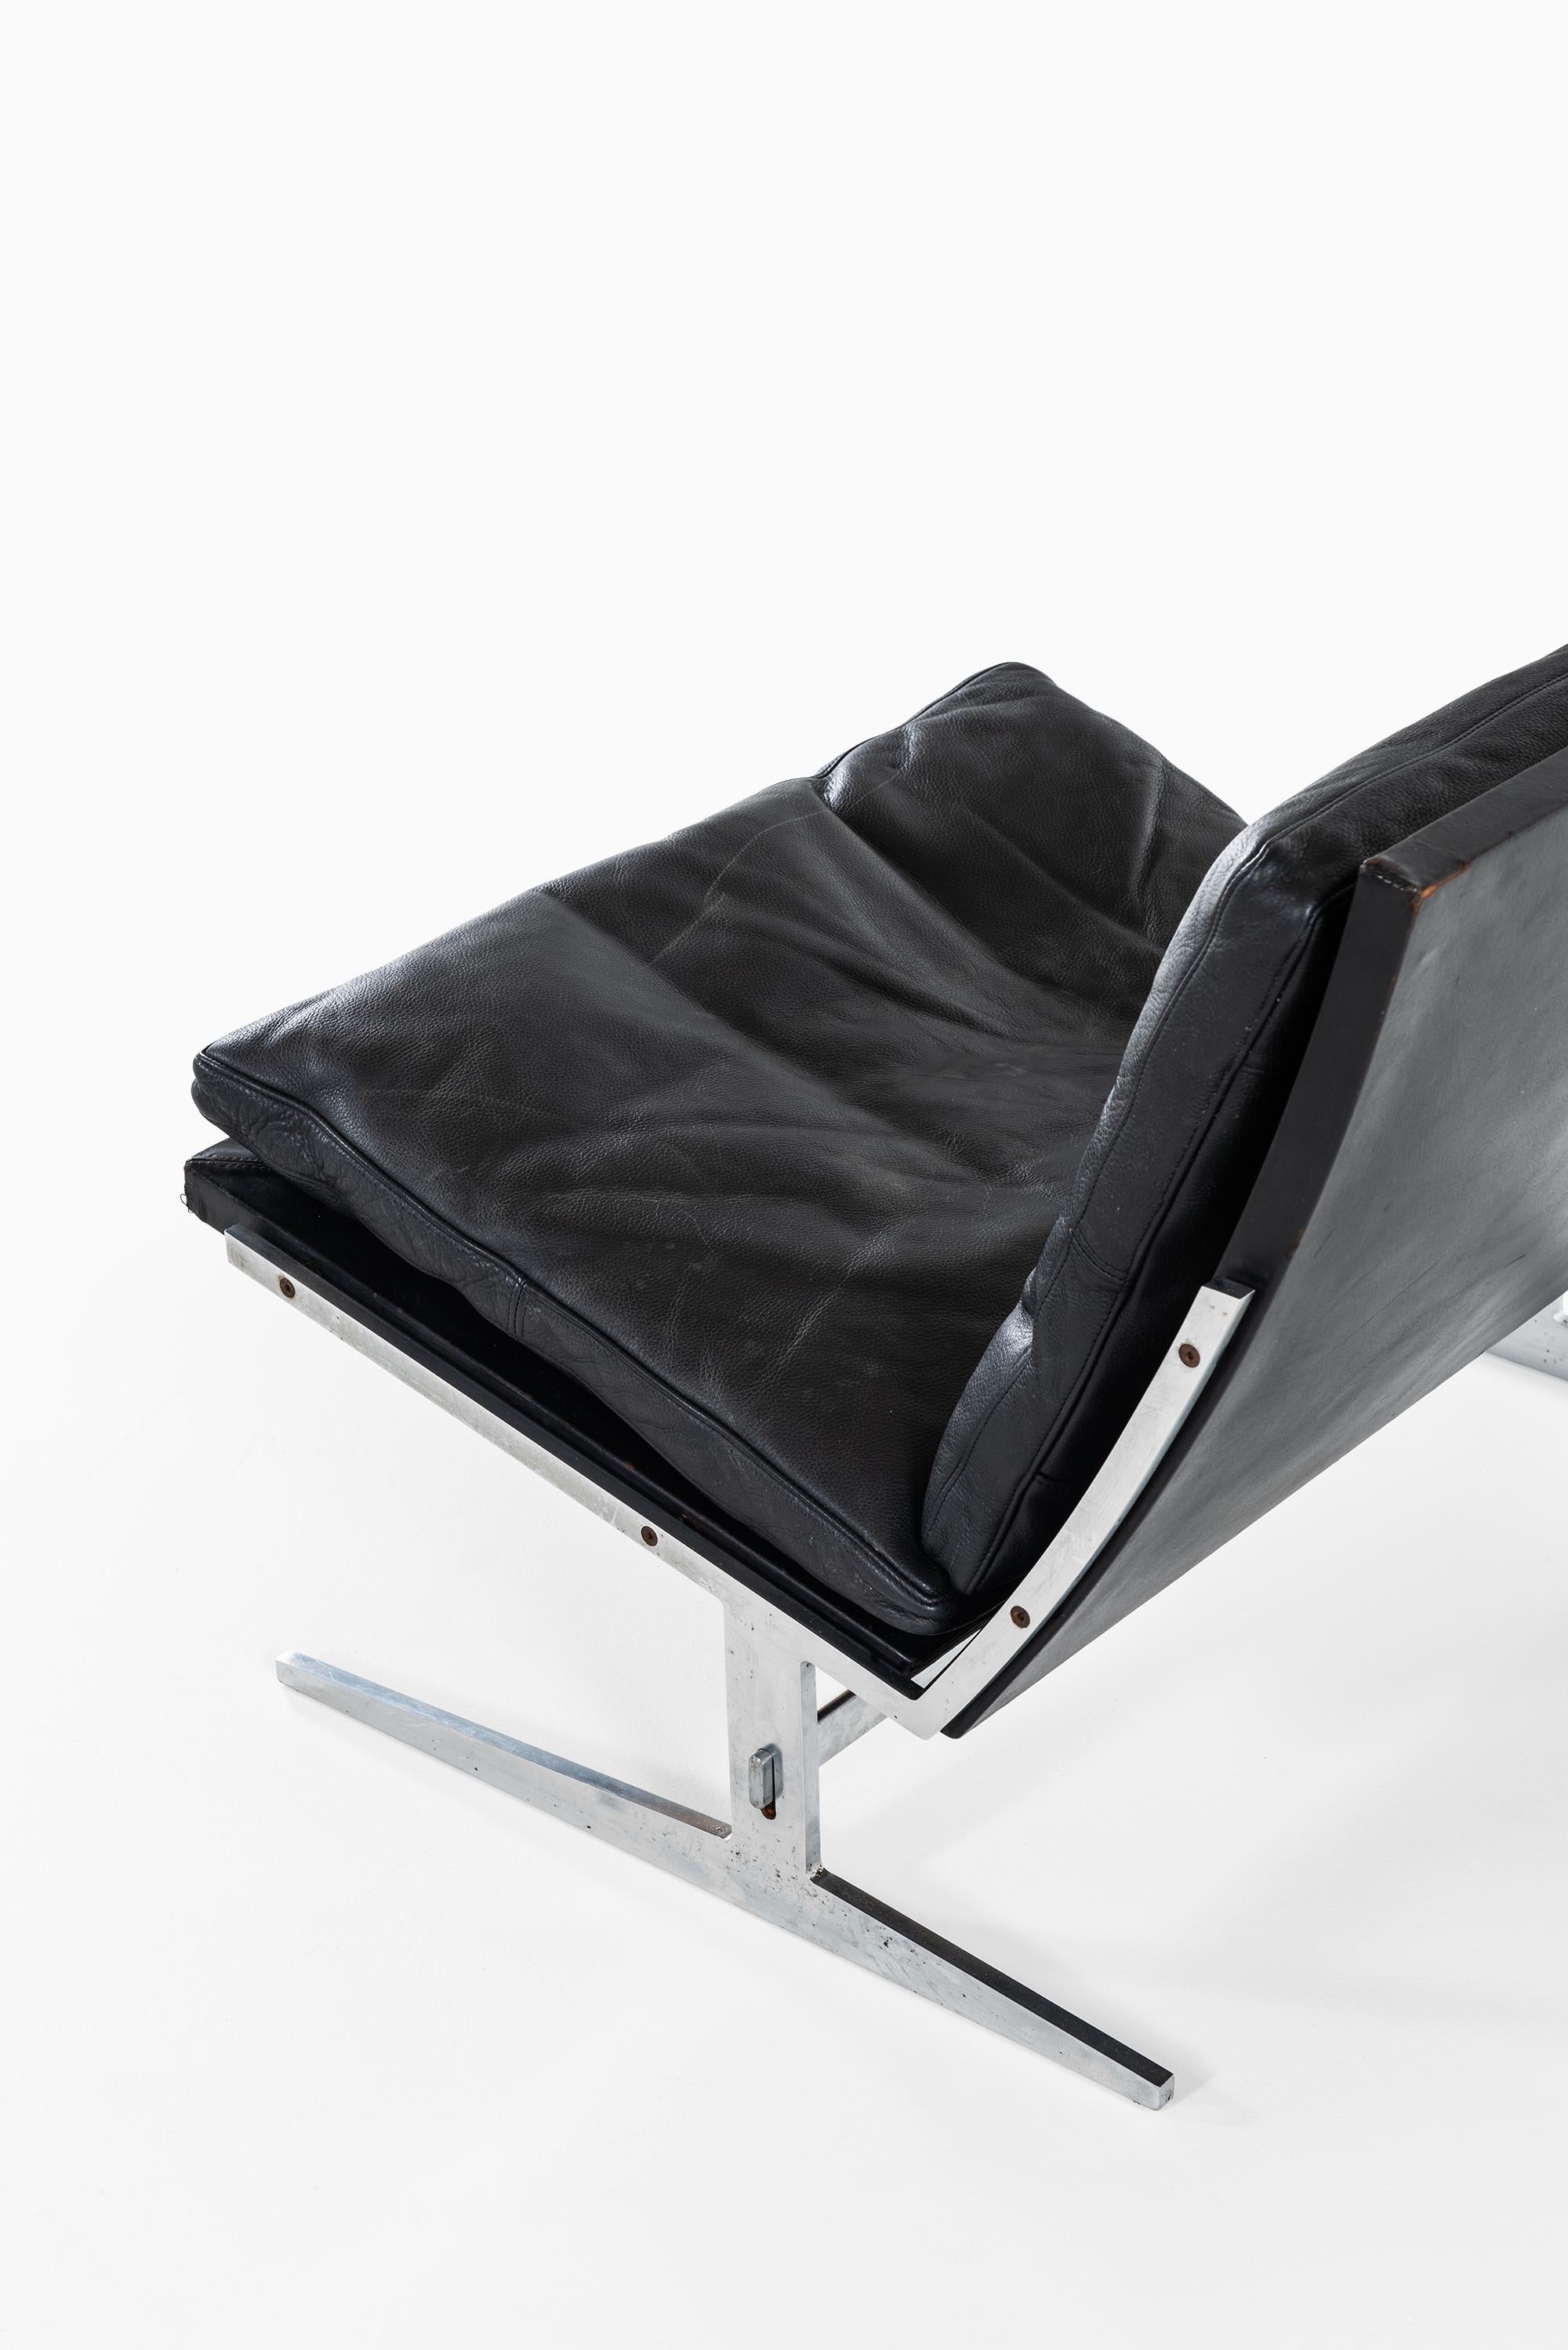 Scandinavian Modern Jørgen Kastholm & Preben Fabricius Easy Chairs Model Bo-561 by Bo-Ex in Denmark  For Sale